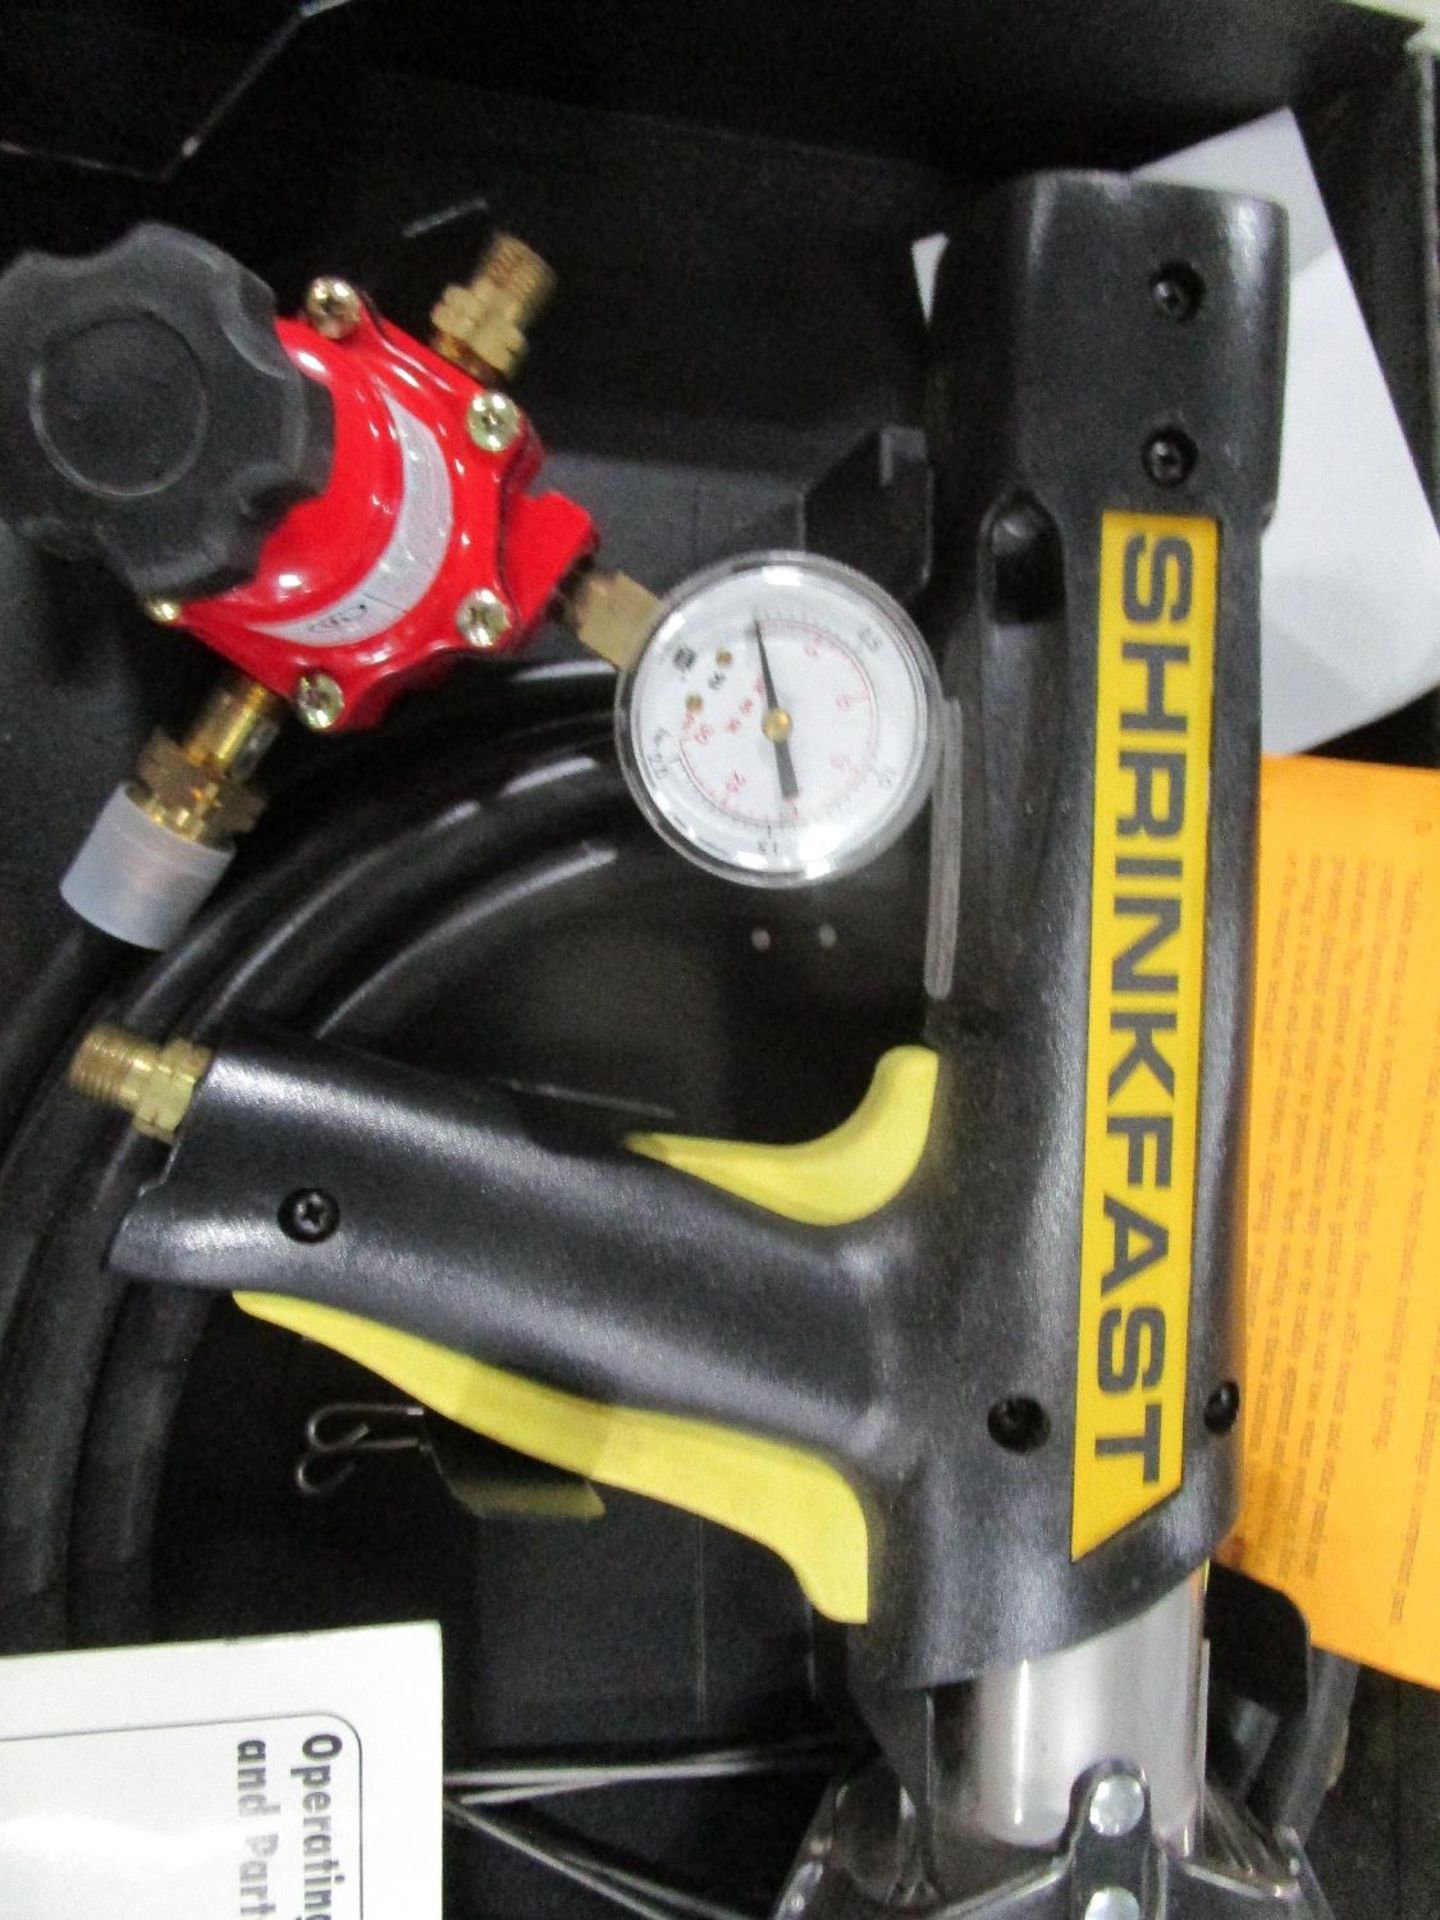 Shrinkfast 47G3 LP Gas Heat Shrin Torch Kit - Image 2 of 2